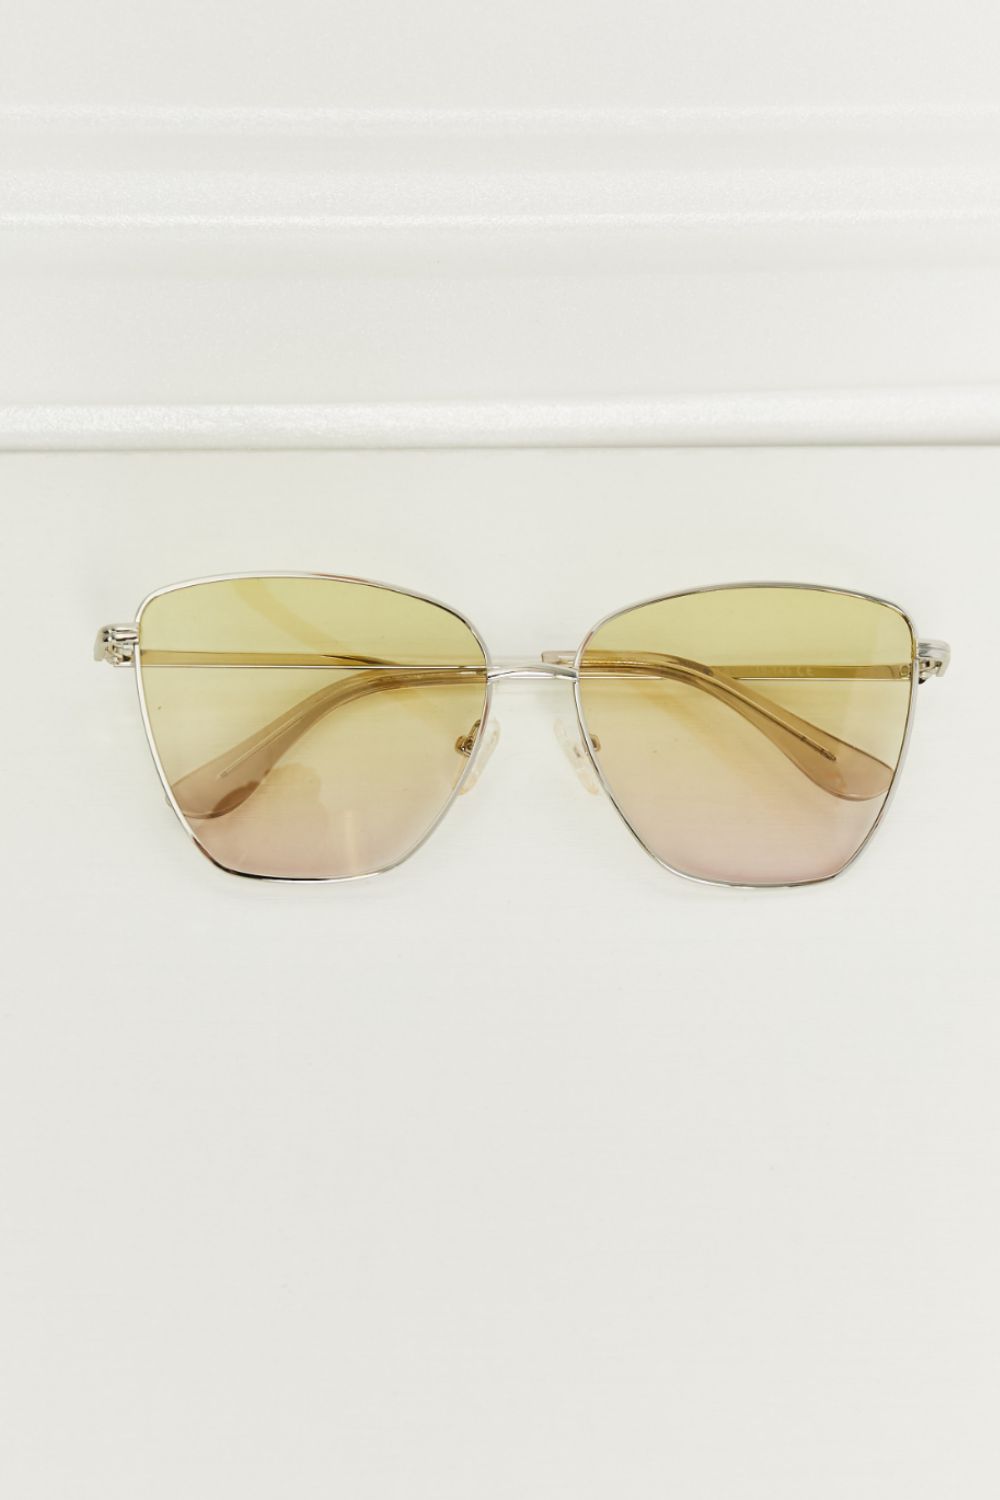 Antique White Livin Metal Frame Full Rim Sunglasses Sunglasses